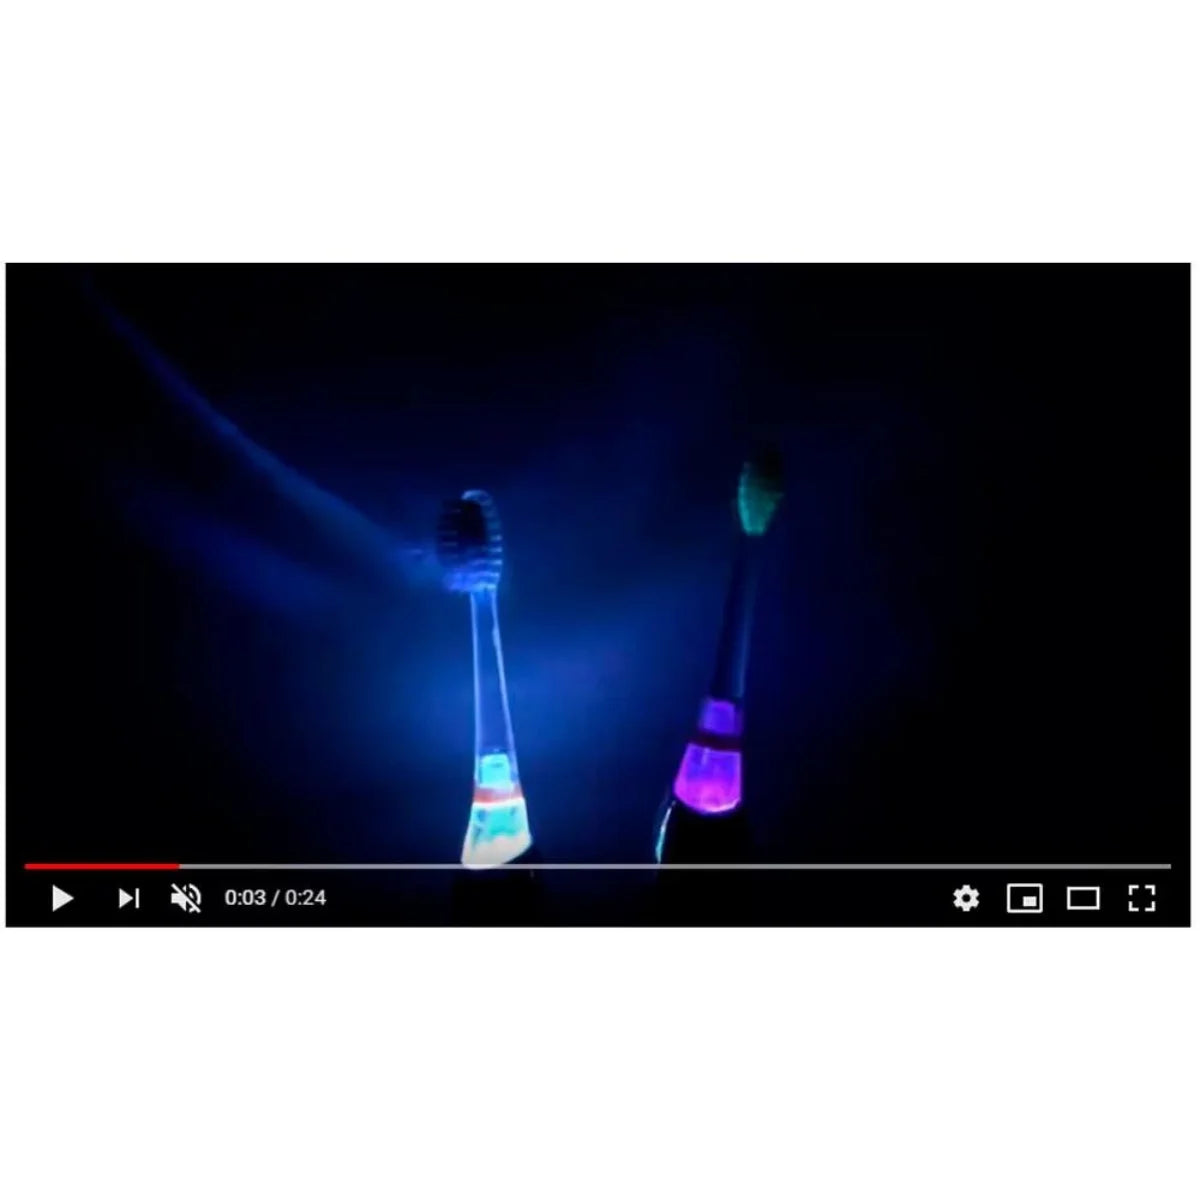 Brushbaby Kids Sonic Electric Toothbrush light up